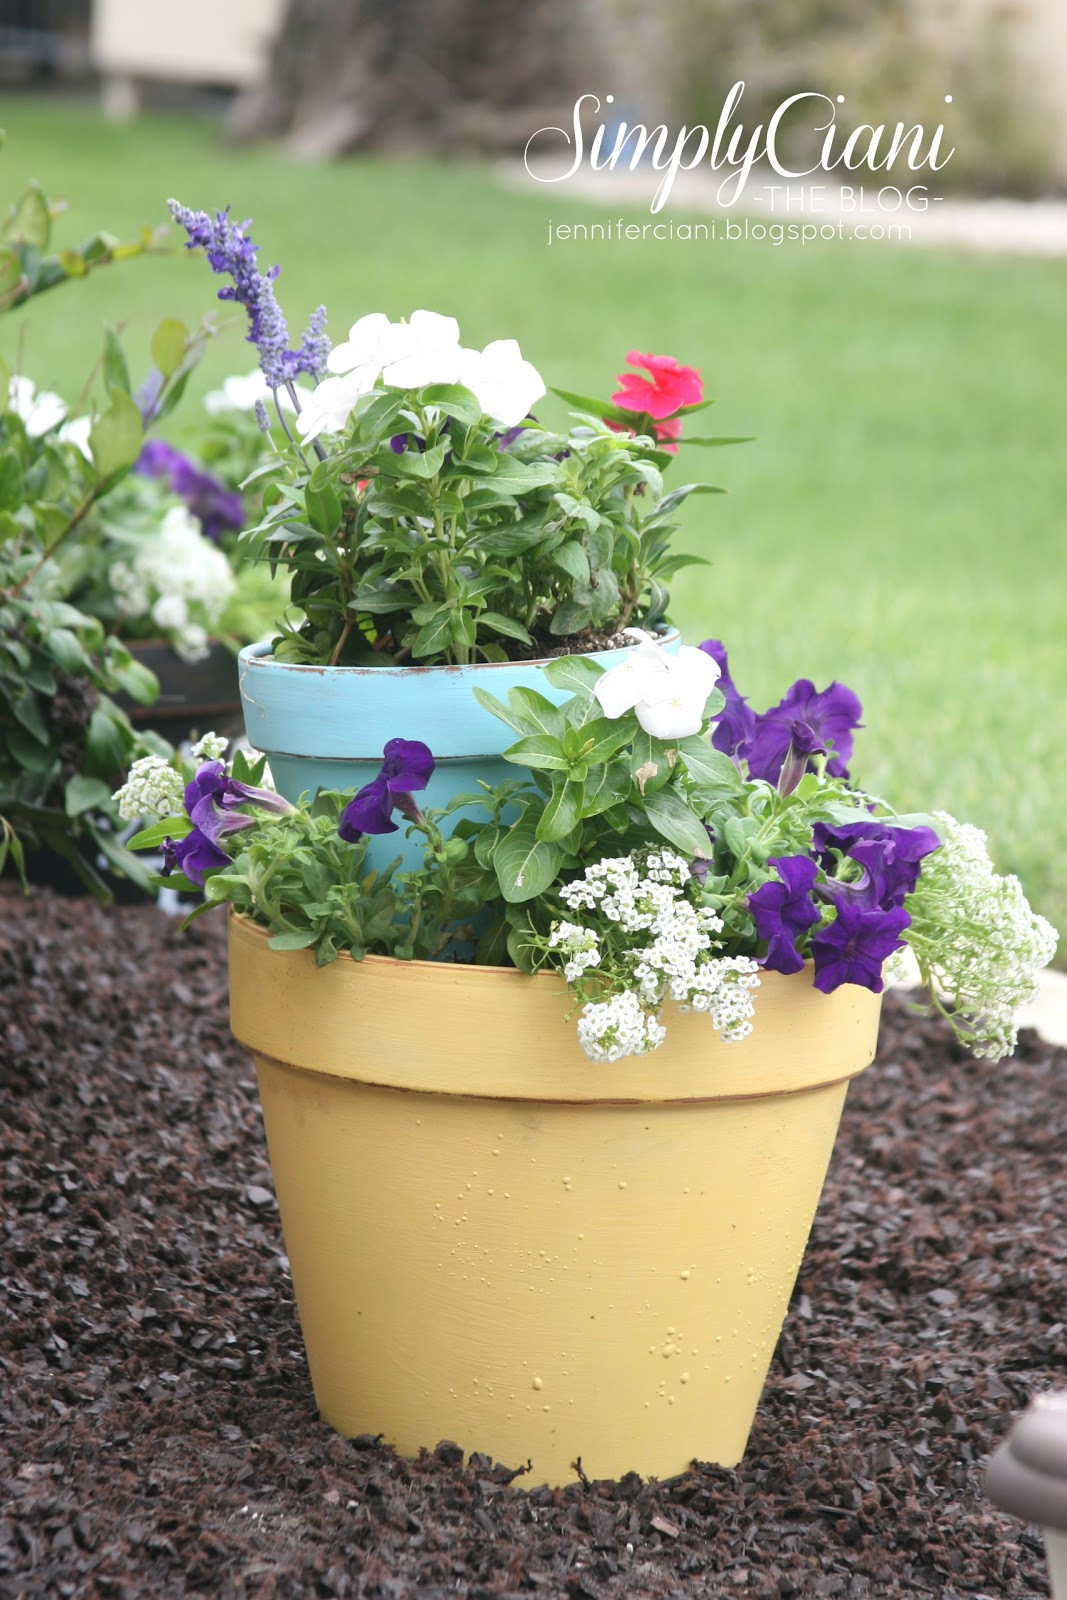 Best ideas about DIY Flower Pots
. Save or Pin DIY tiered terracotta planter & address flower pot Now.